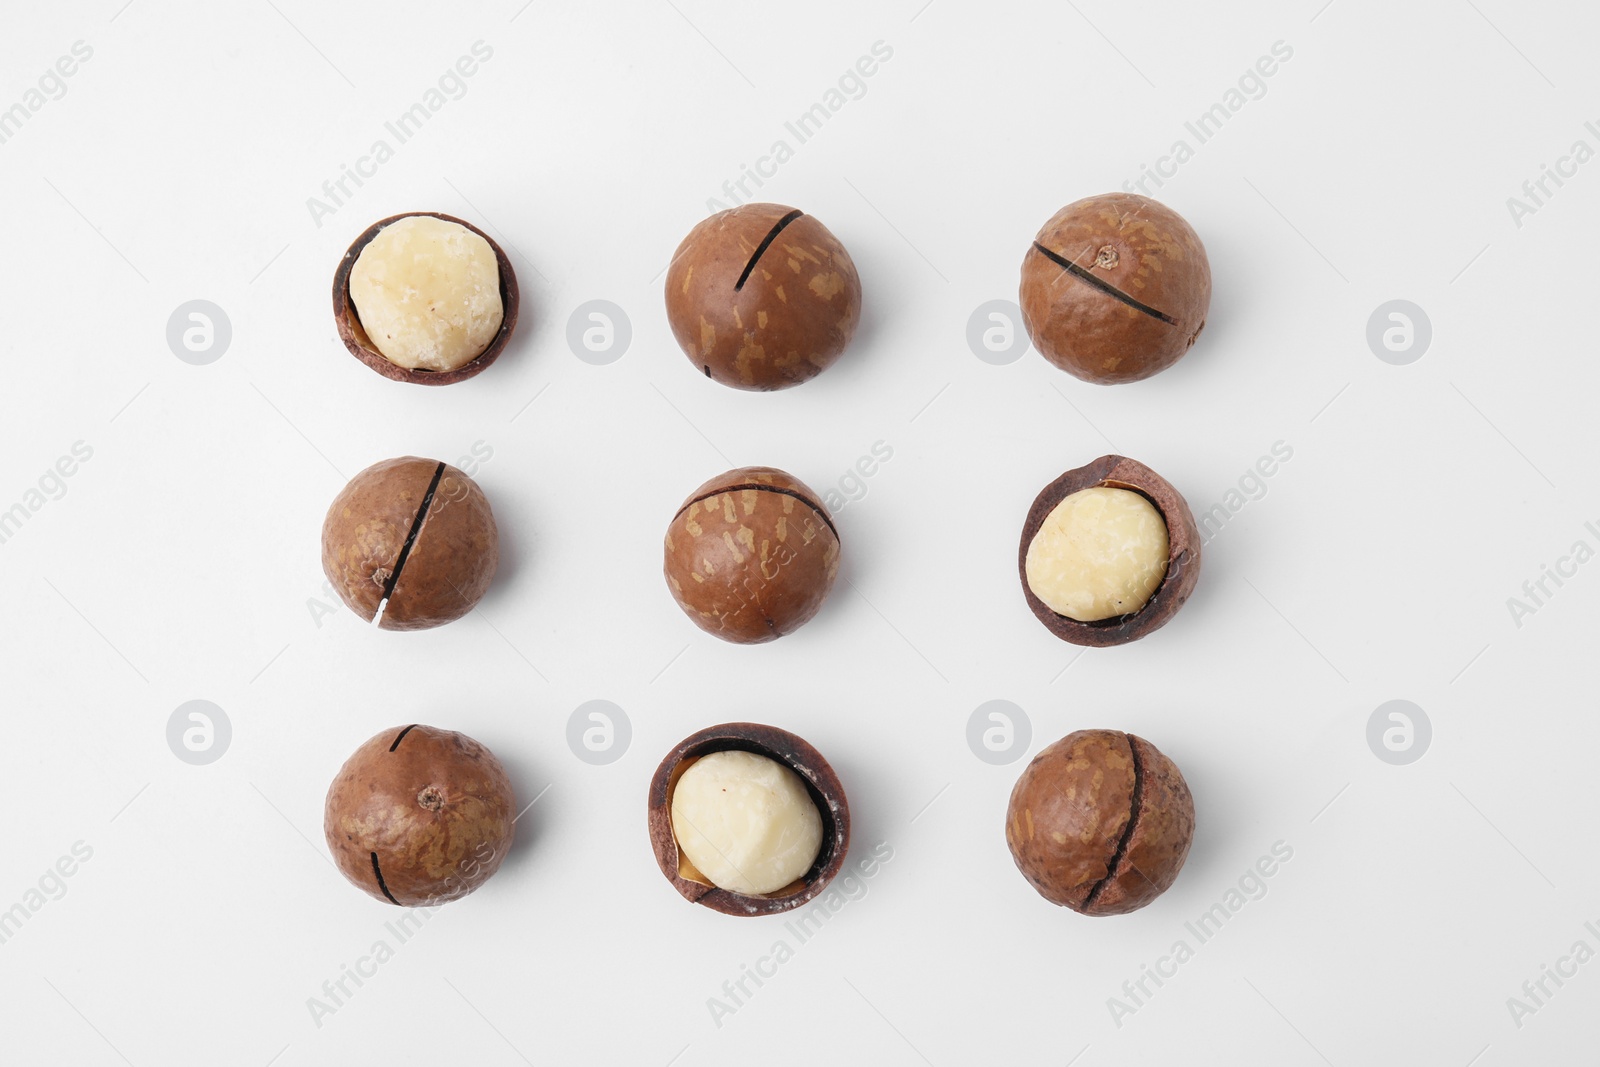 Photo of Tasty Macadamia nuts on white background, flat lay